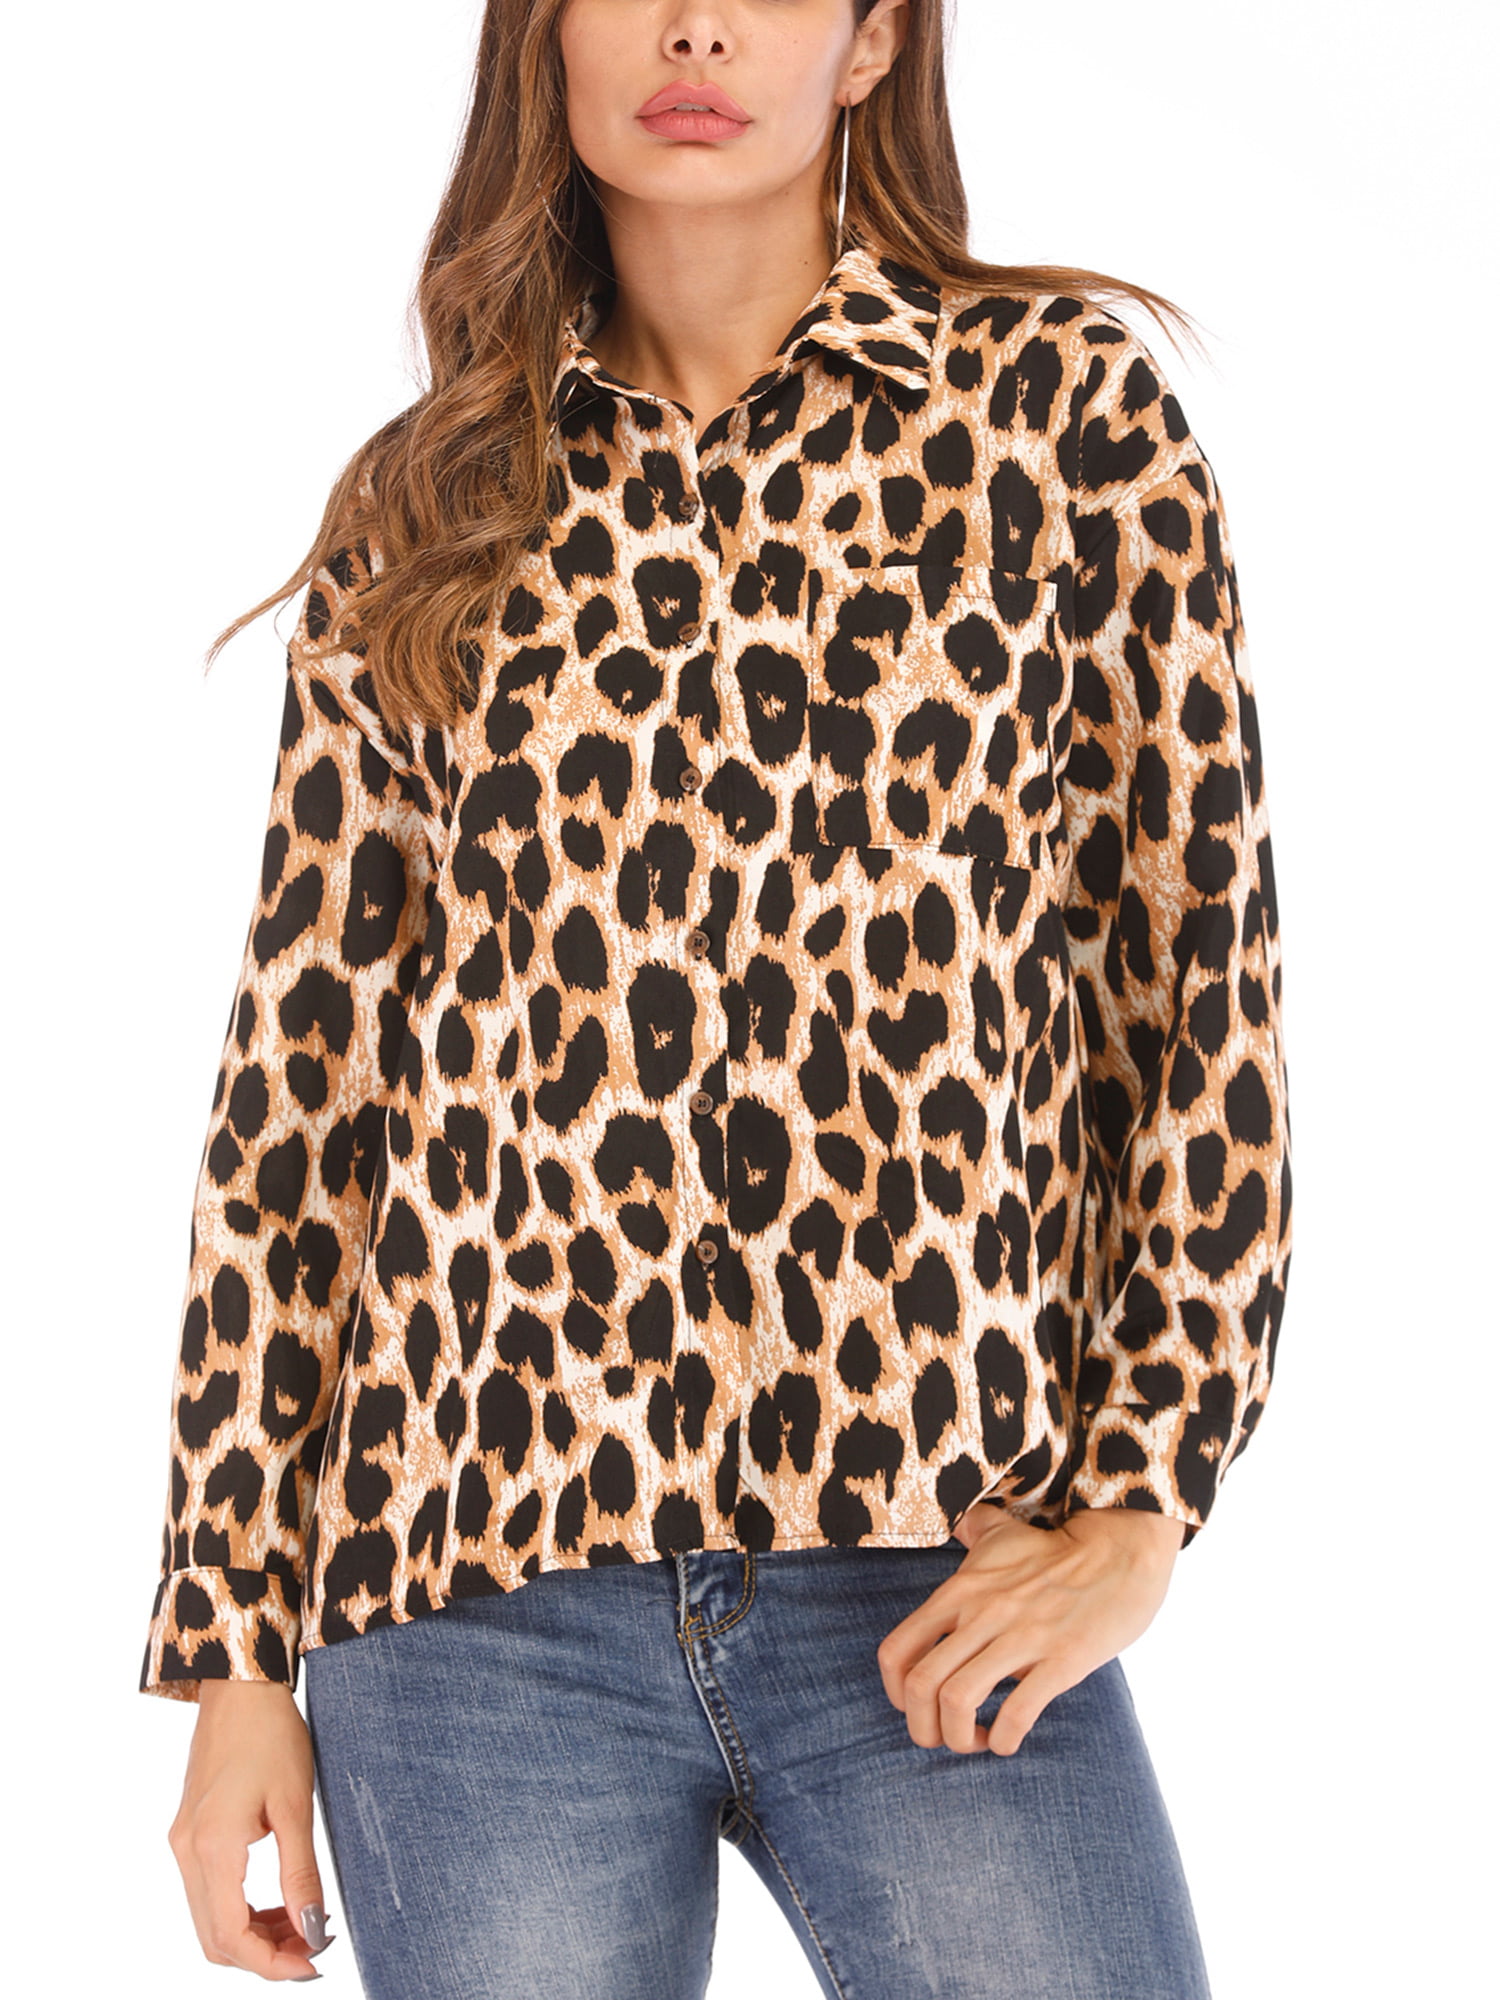 Leopard Blouse Long Sleeve Fashion Ladies T-Shirt Oversize Tops Outdoor Party Club Shirt iCODOD Women Plus Size Shirt 